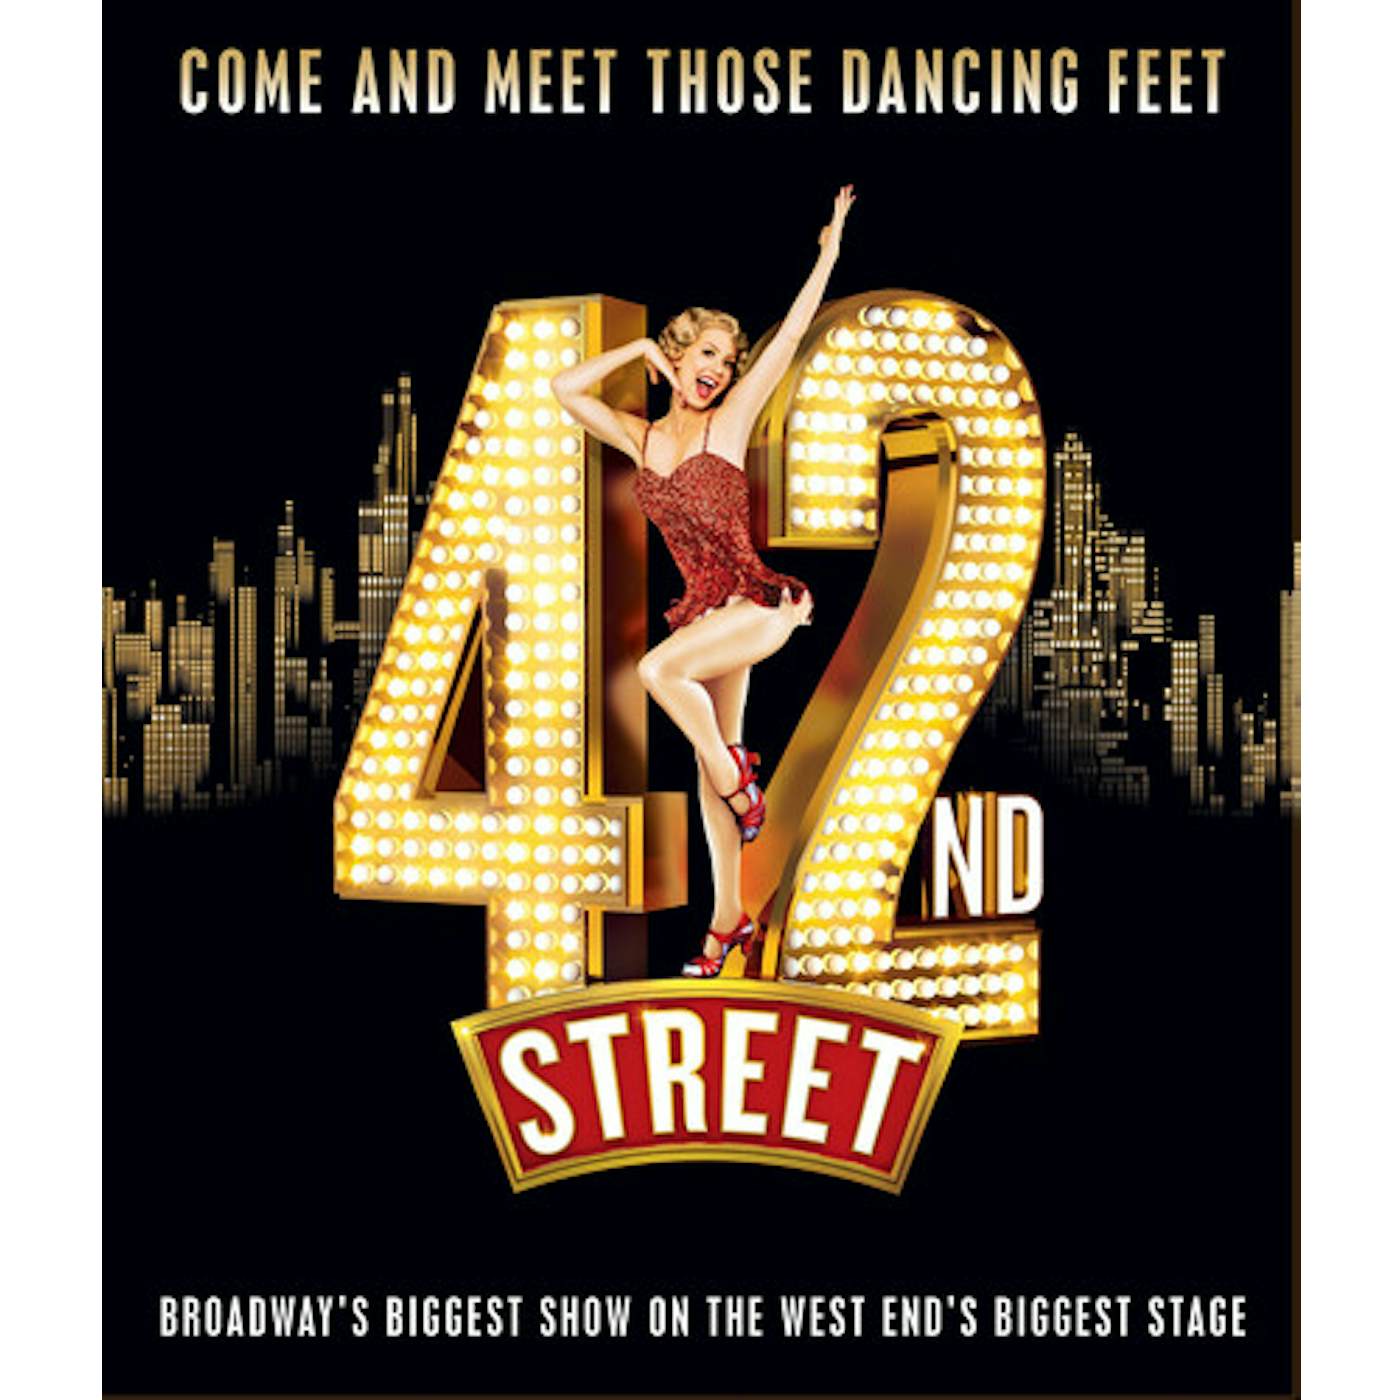 42ND STREET Blu-ray